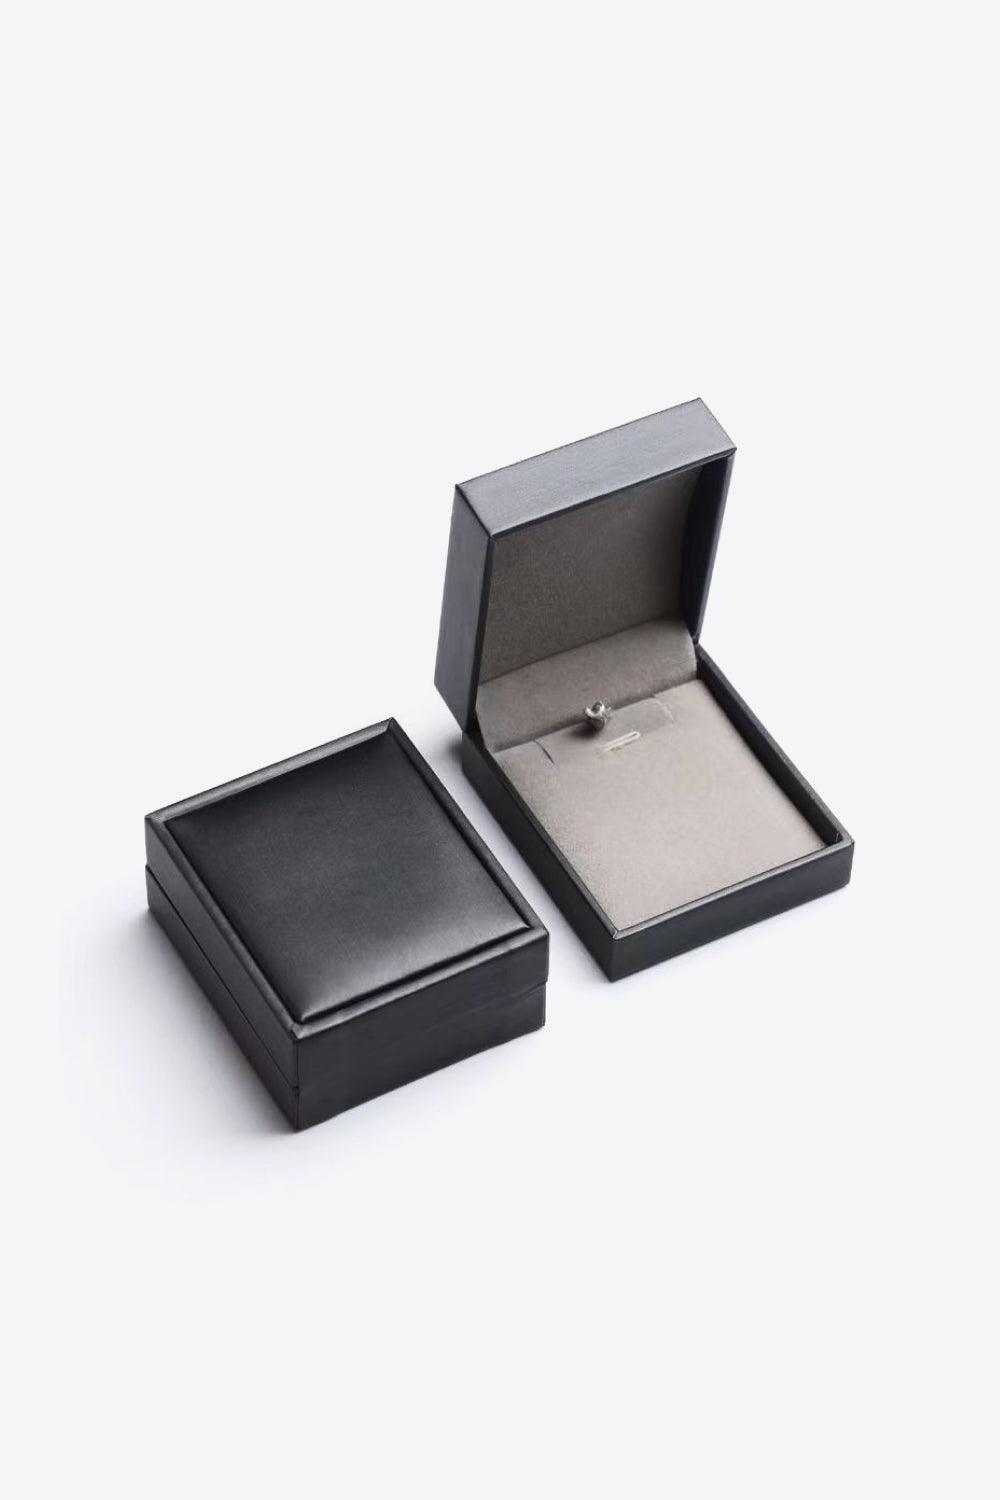 925 Sterling Silver 1 Carat Moissanite Pendant Necklace - Flyclothing LLC